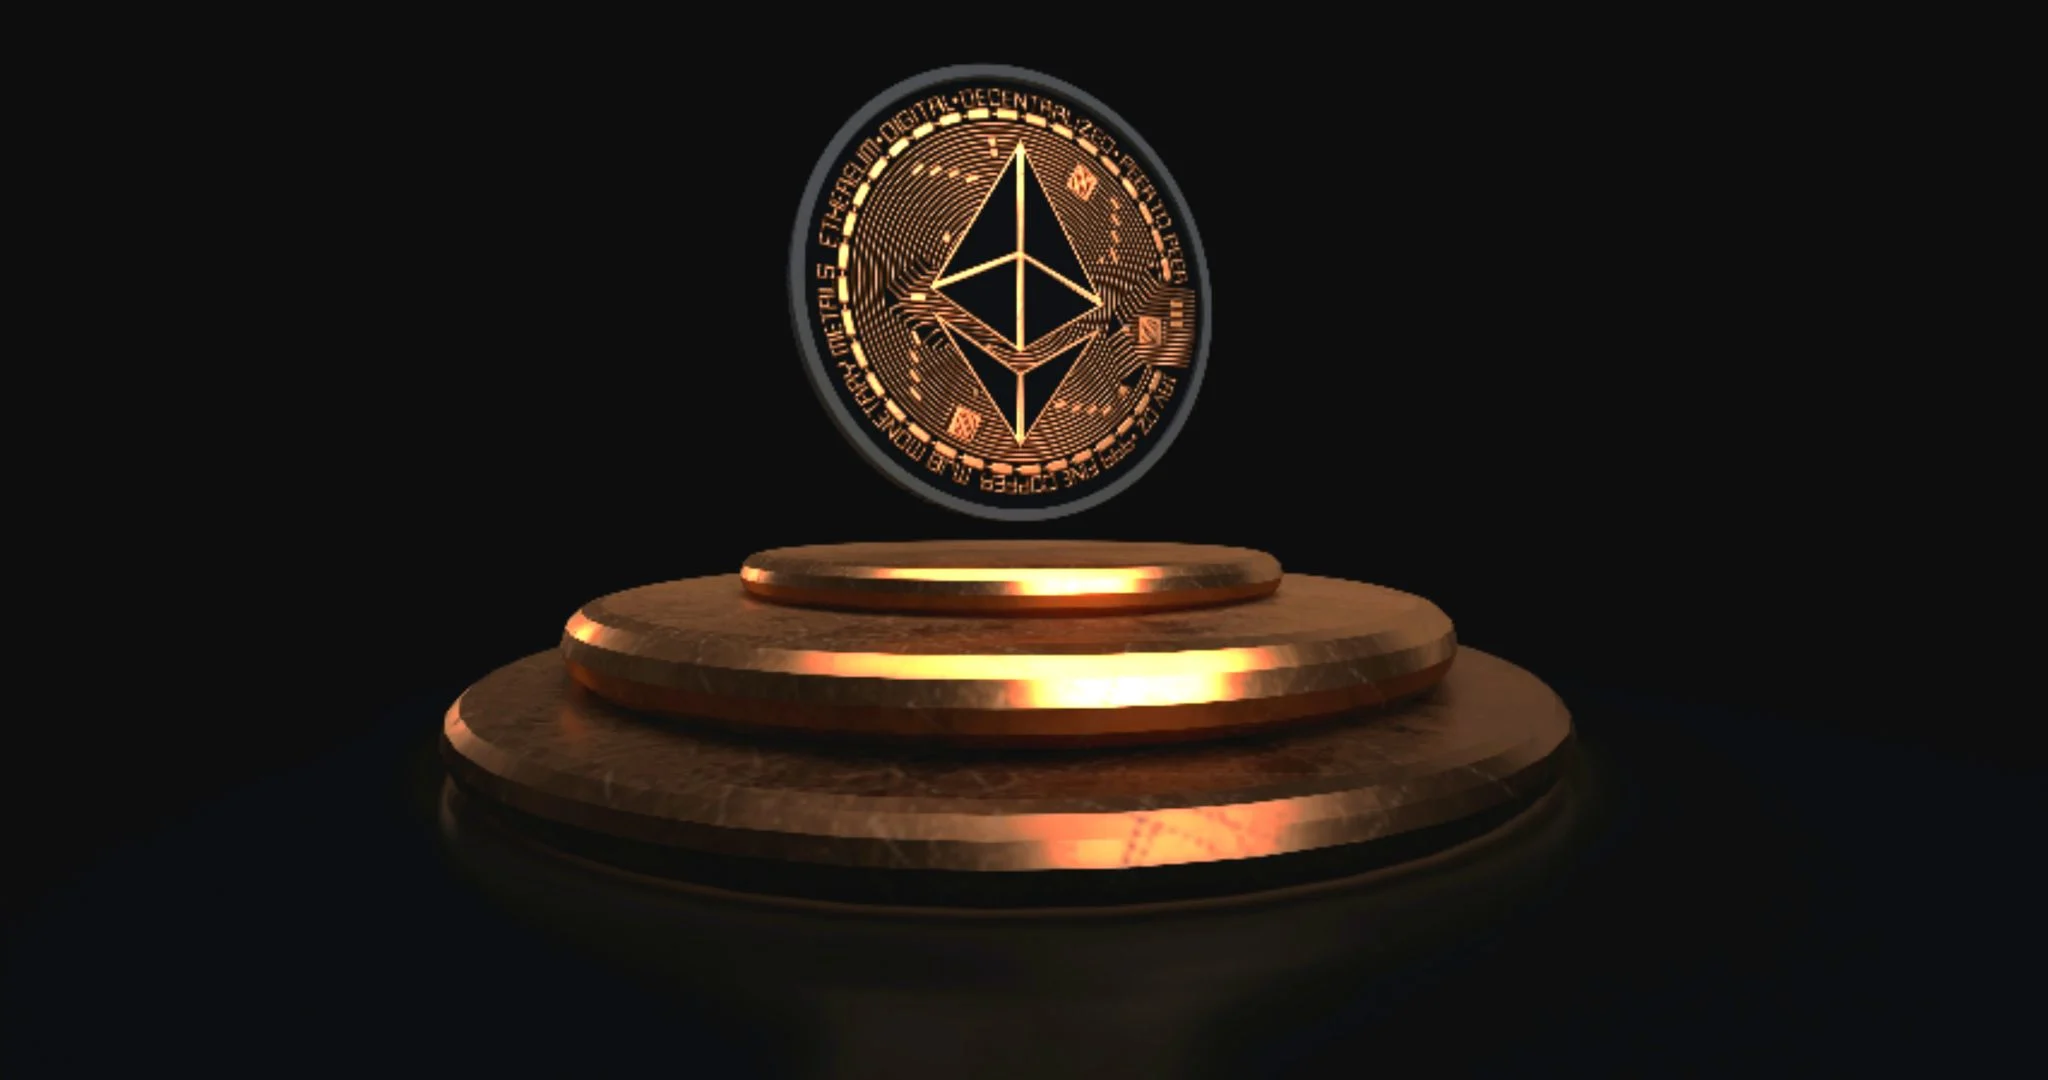 An Ethereum coin floating above a pedestal. Source: Bastian Riccardi / Unsplash